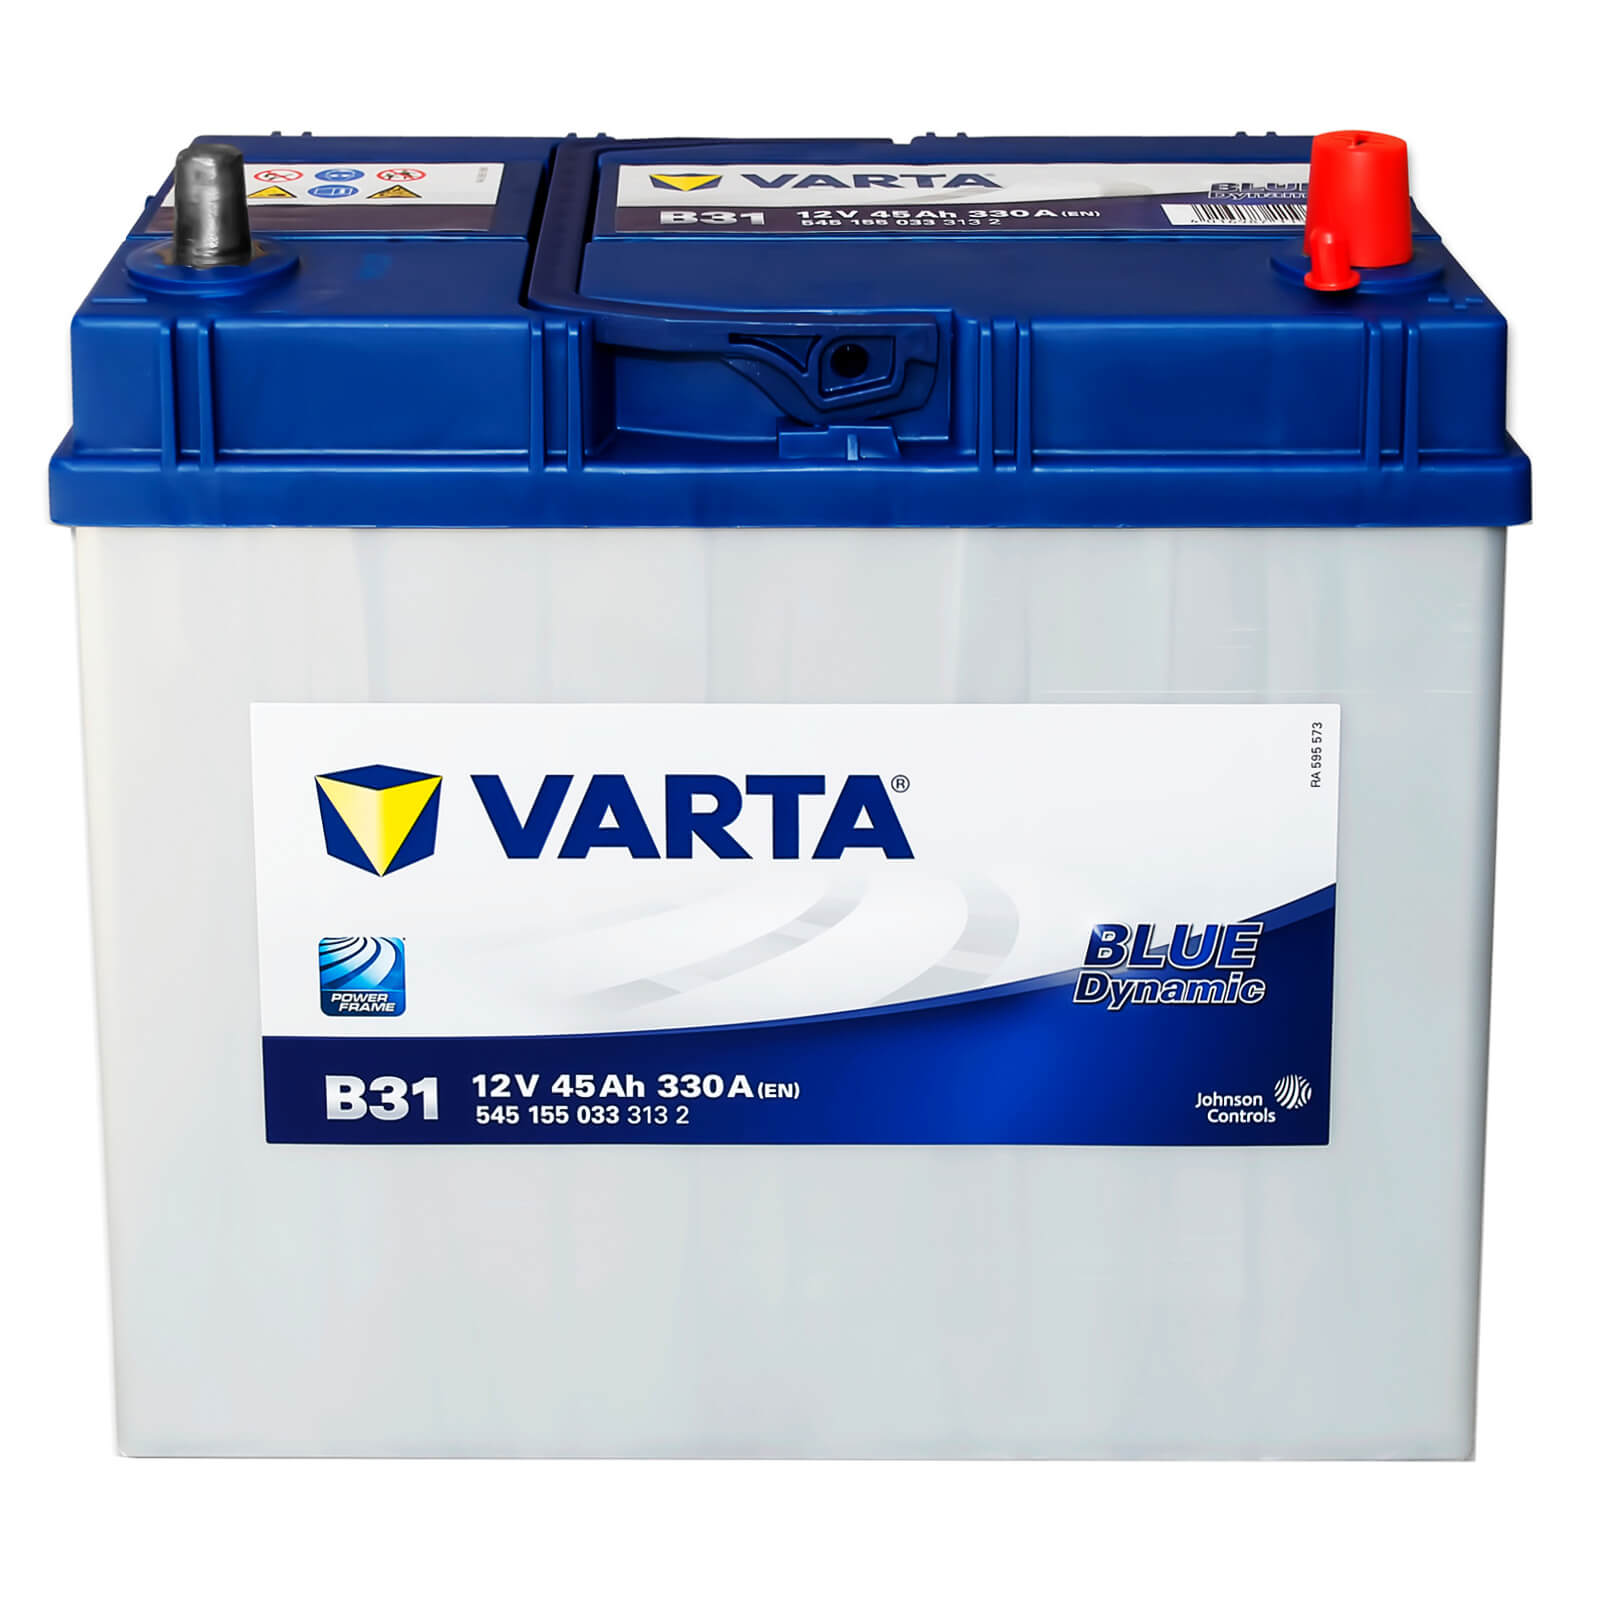 Asia Autobatterie 12V 45Ah Varta B31 Blue Dynamic 5451550333132